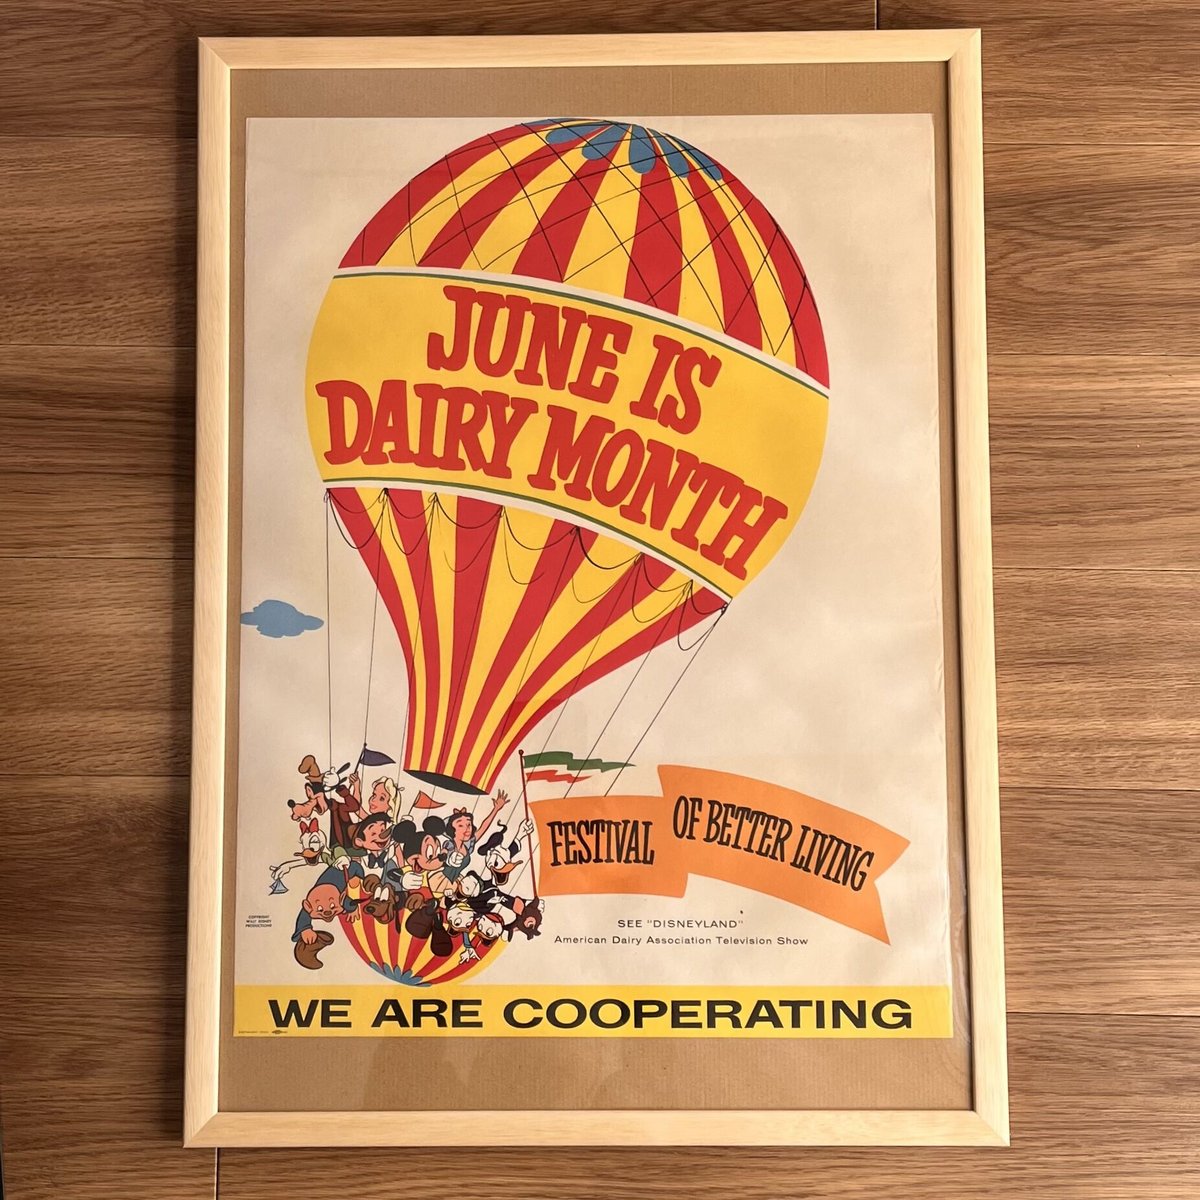 50s Disney “JUNE IS DAIRY MONTH” ADVERTISING POSTER 1955年製 ディズニー ポスター  デッドストック② ナチュラルウッドフレーム入り